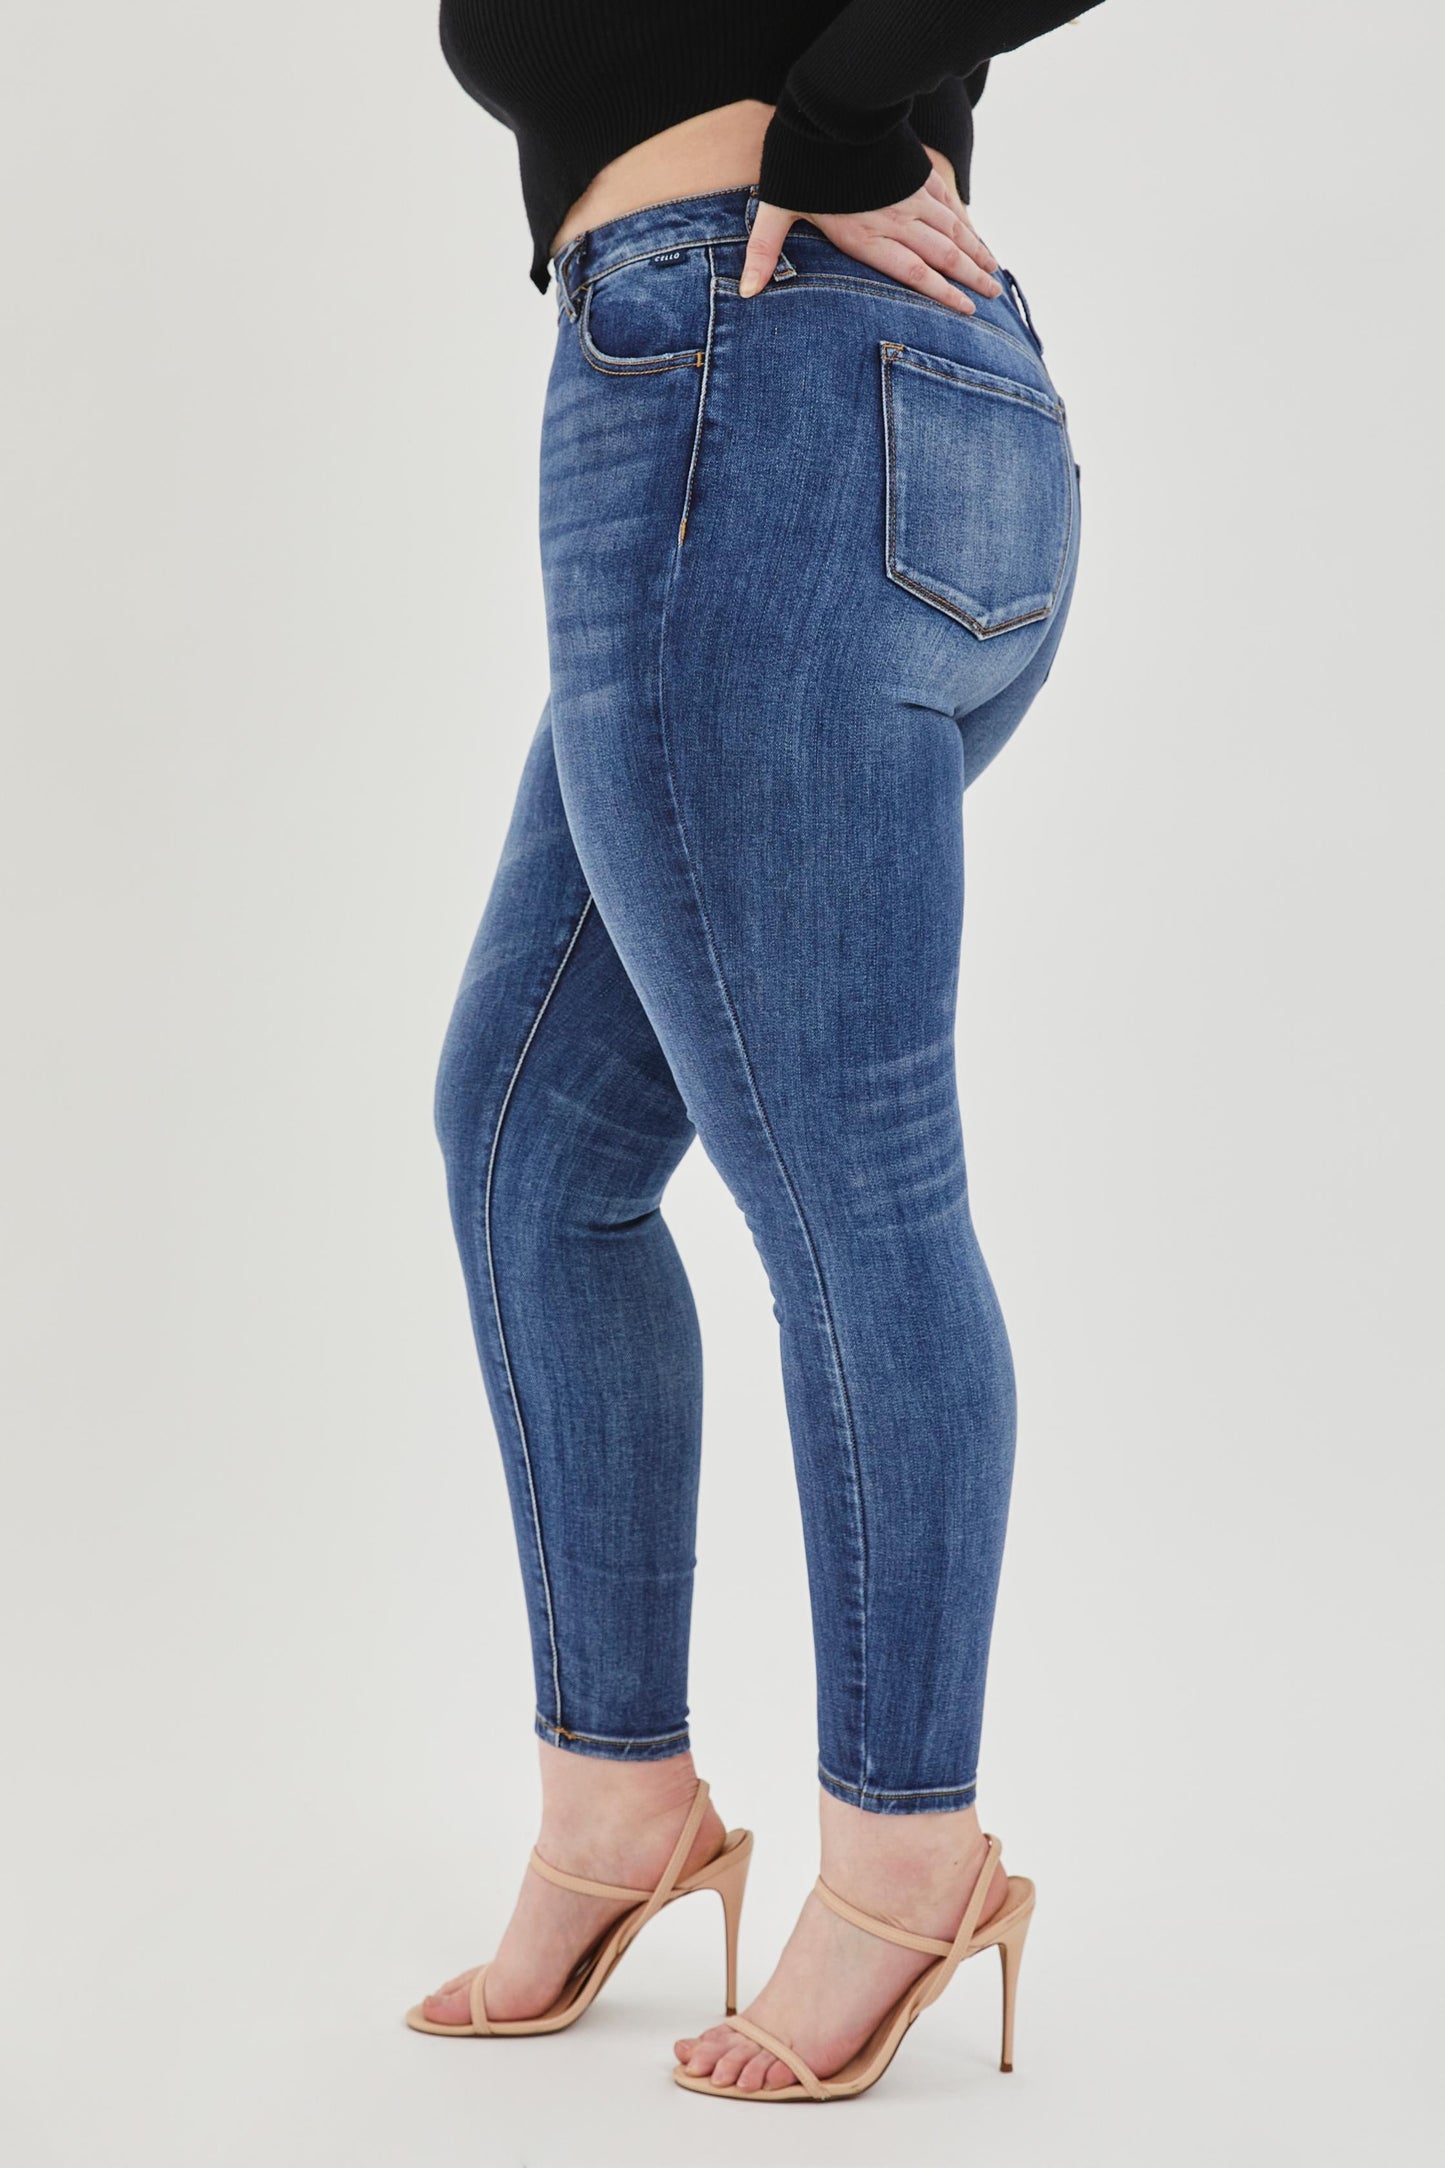 Le jean fashion taille haute #2 (14-22)